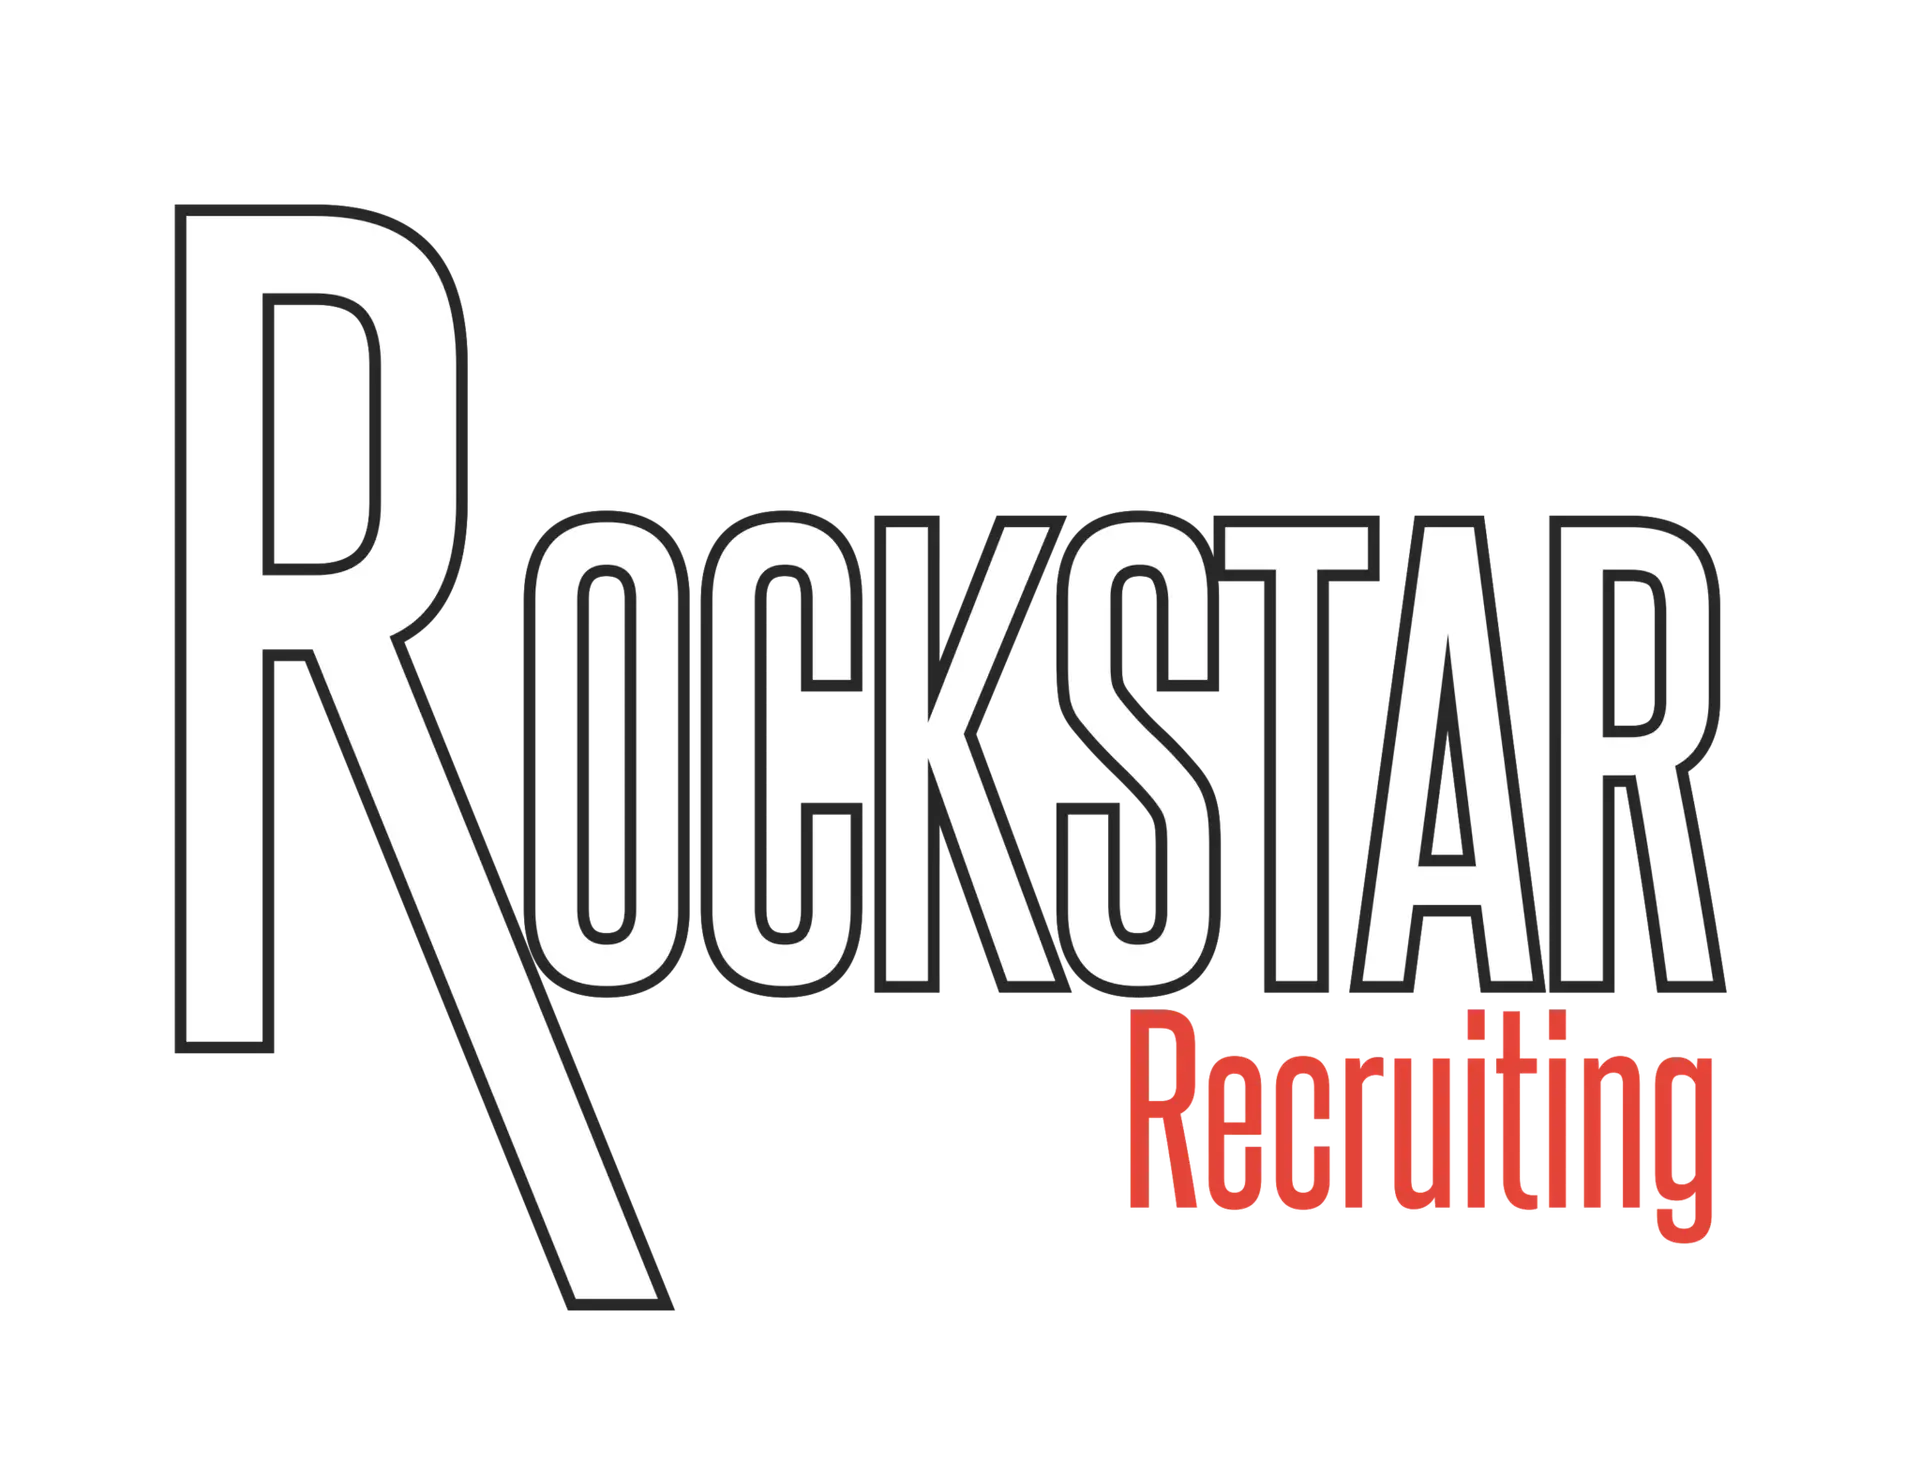 rockstar recruiting logo white